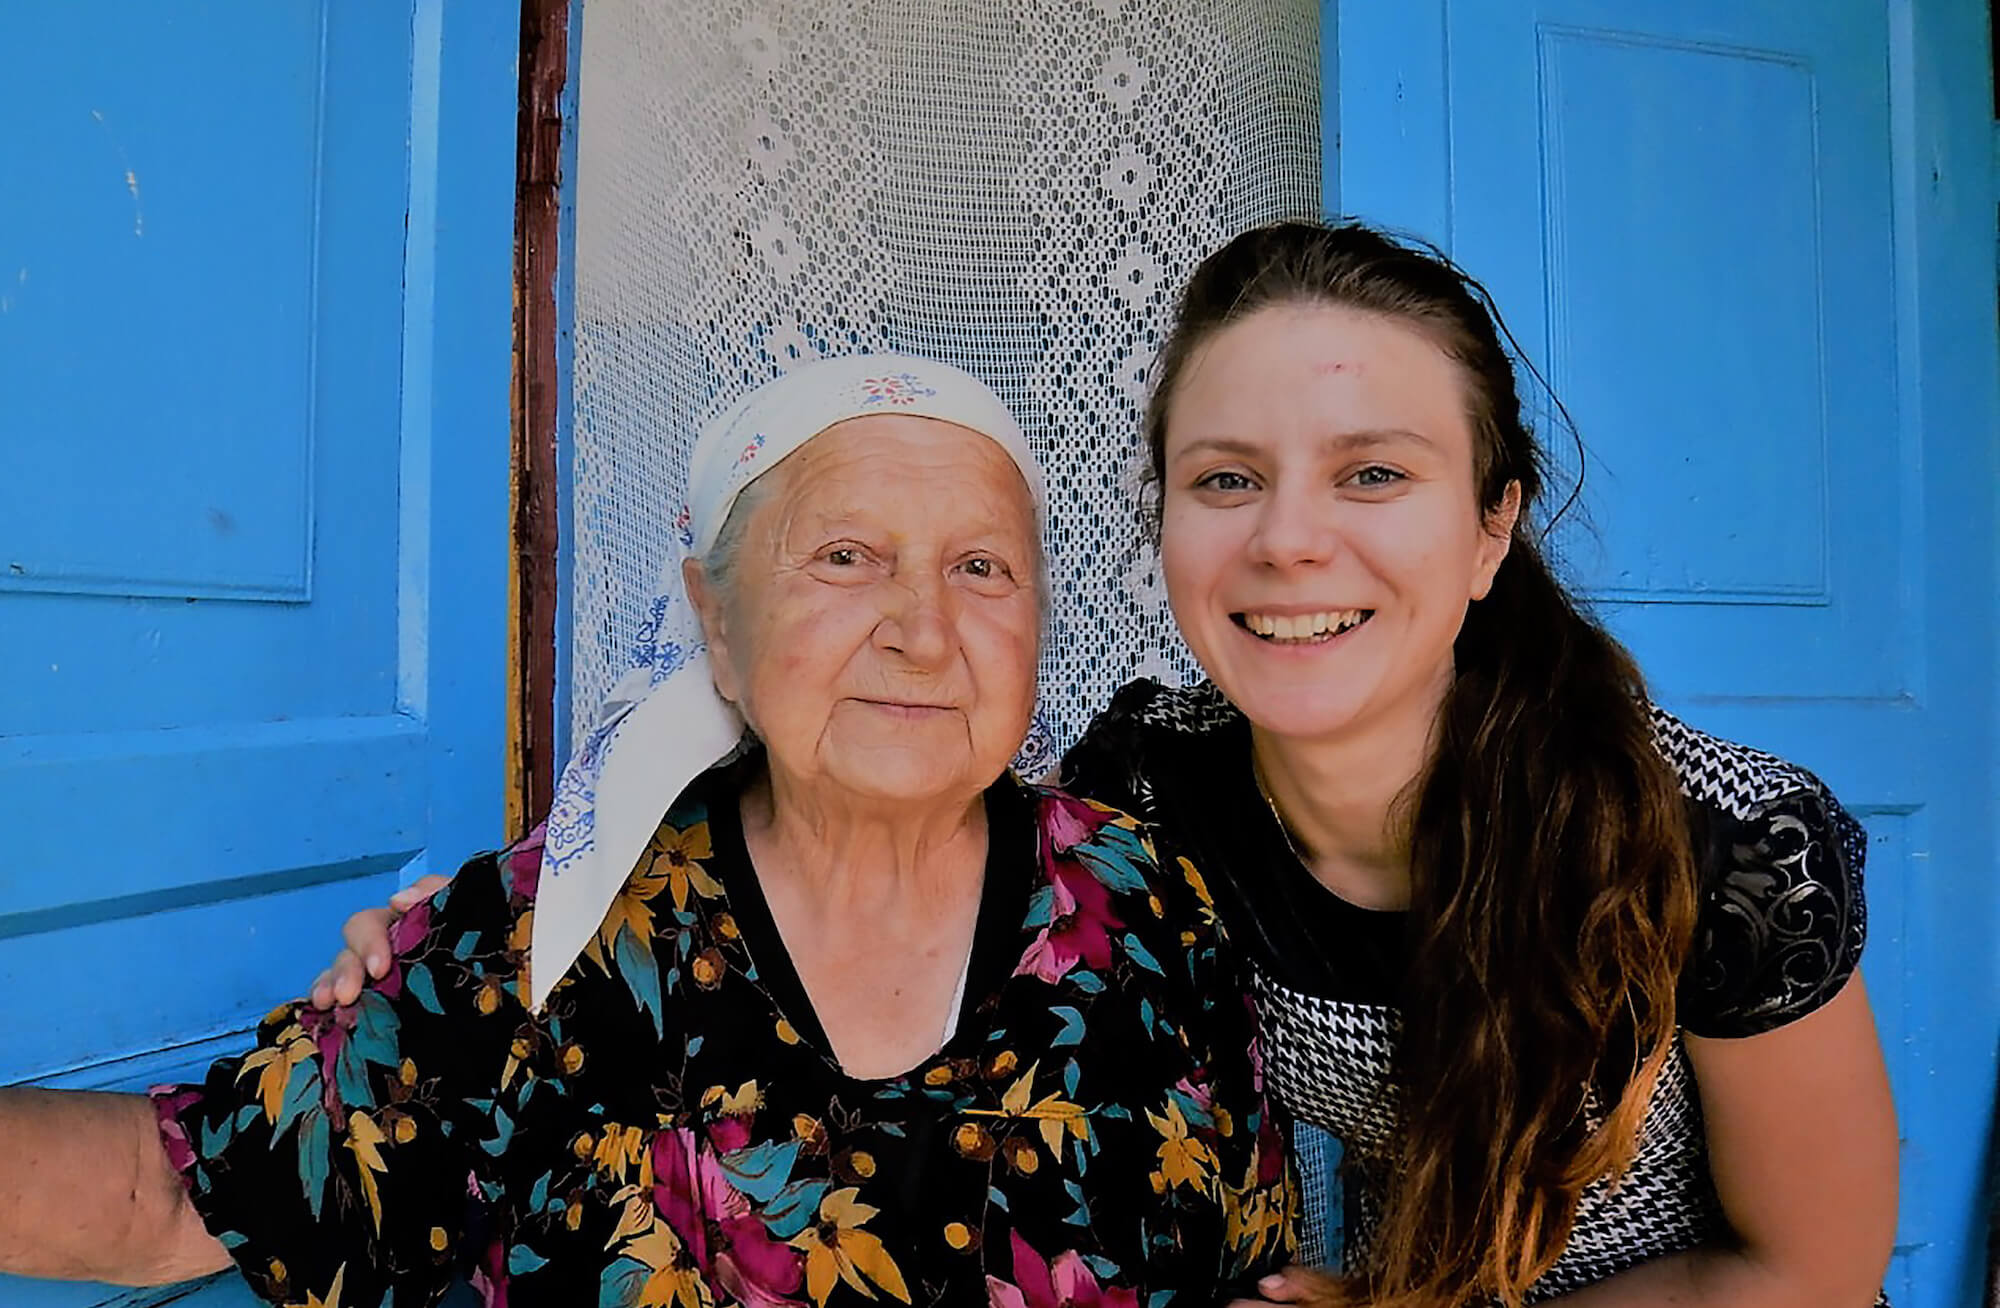 MAXQDA photo contest 2018: Faith of the Elderly Woman